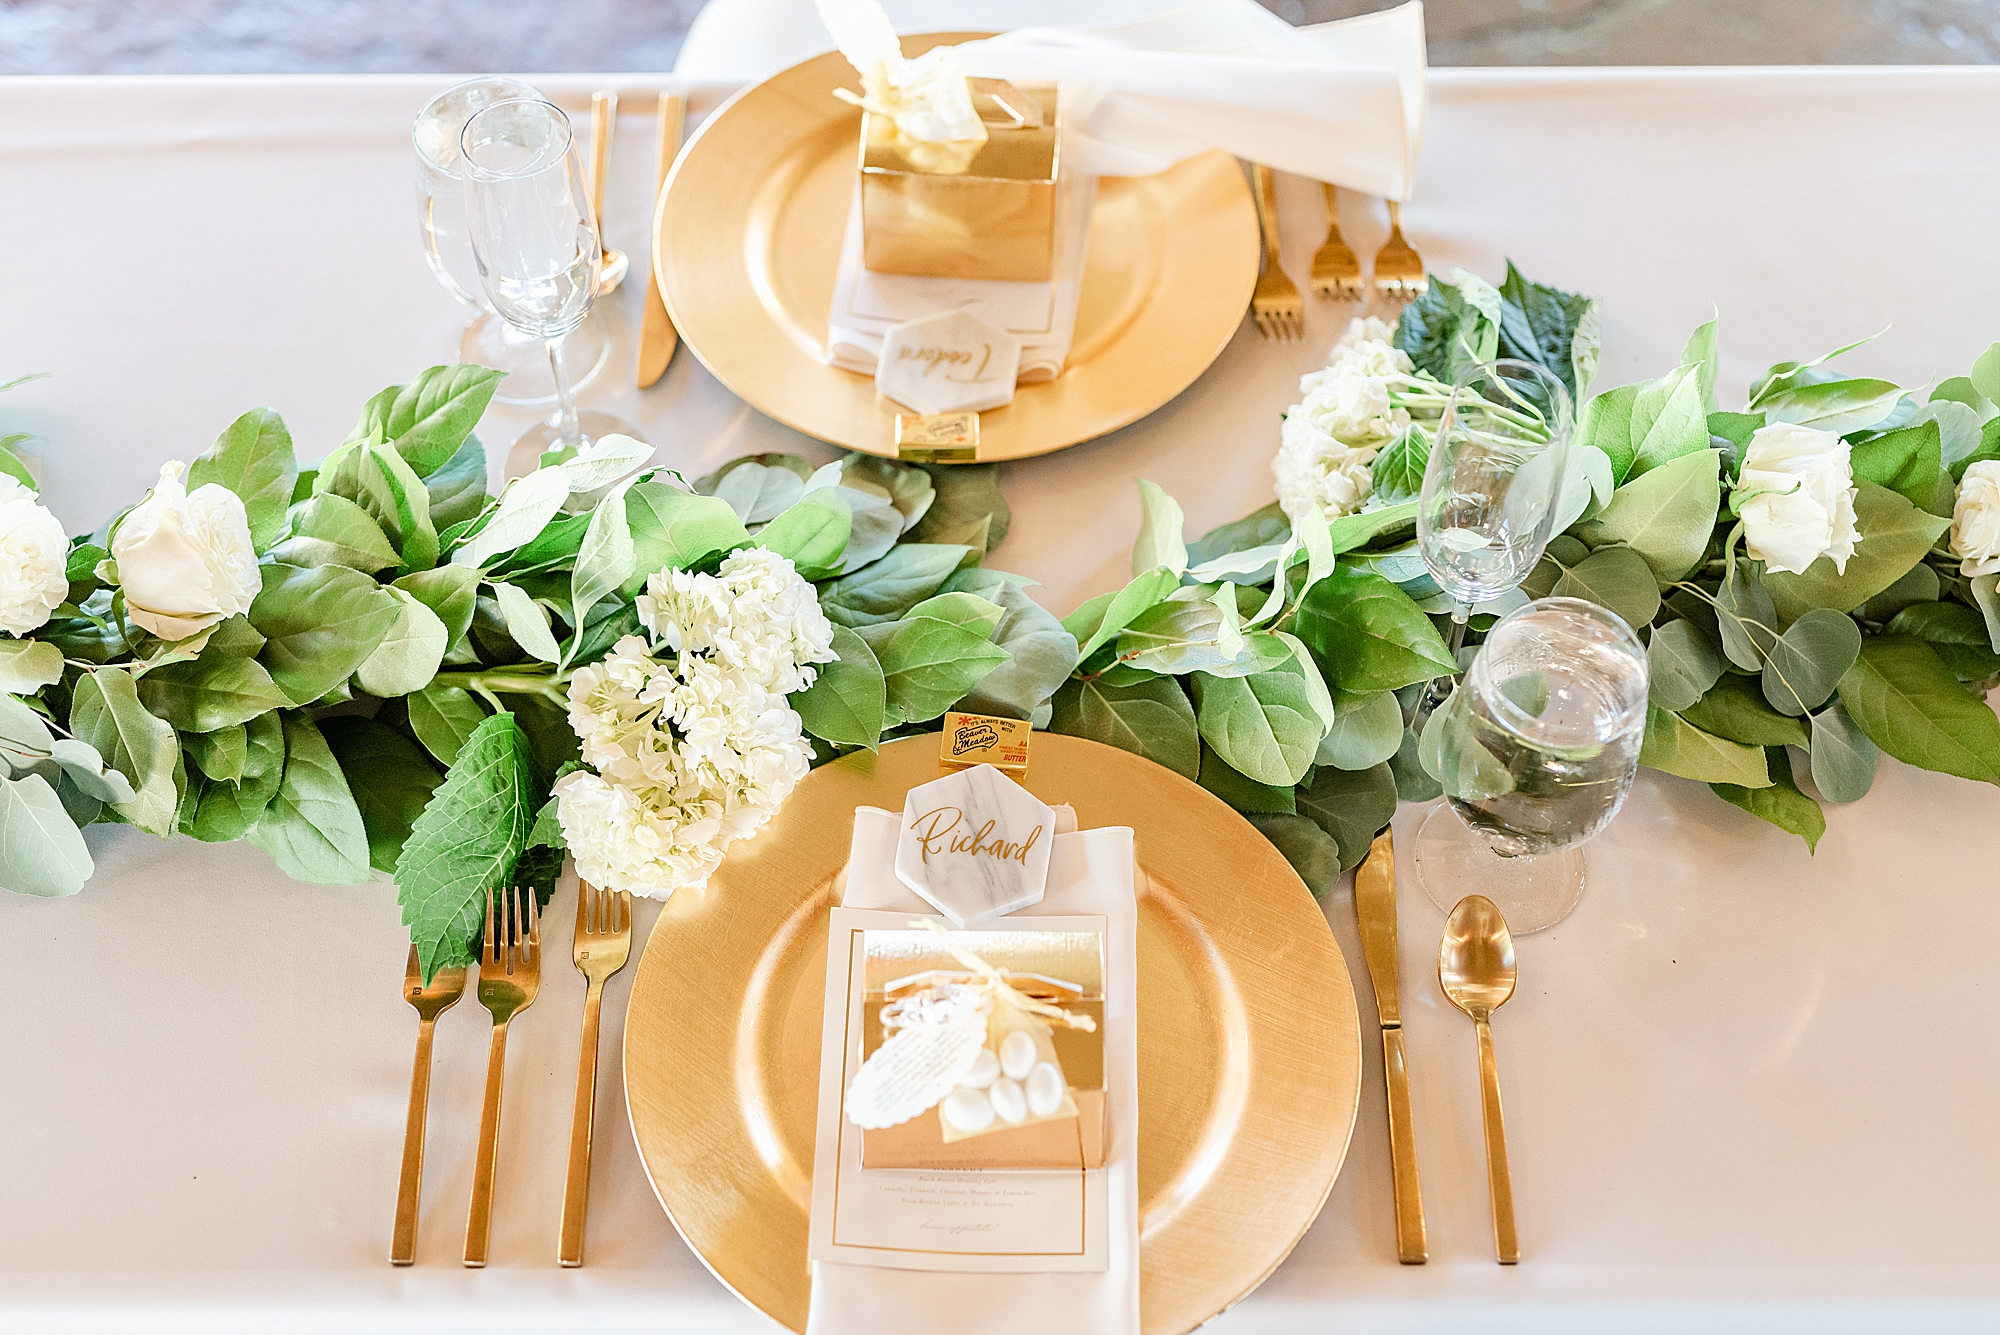 Ohio wedding reception with greenery draped along table